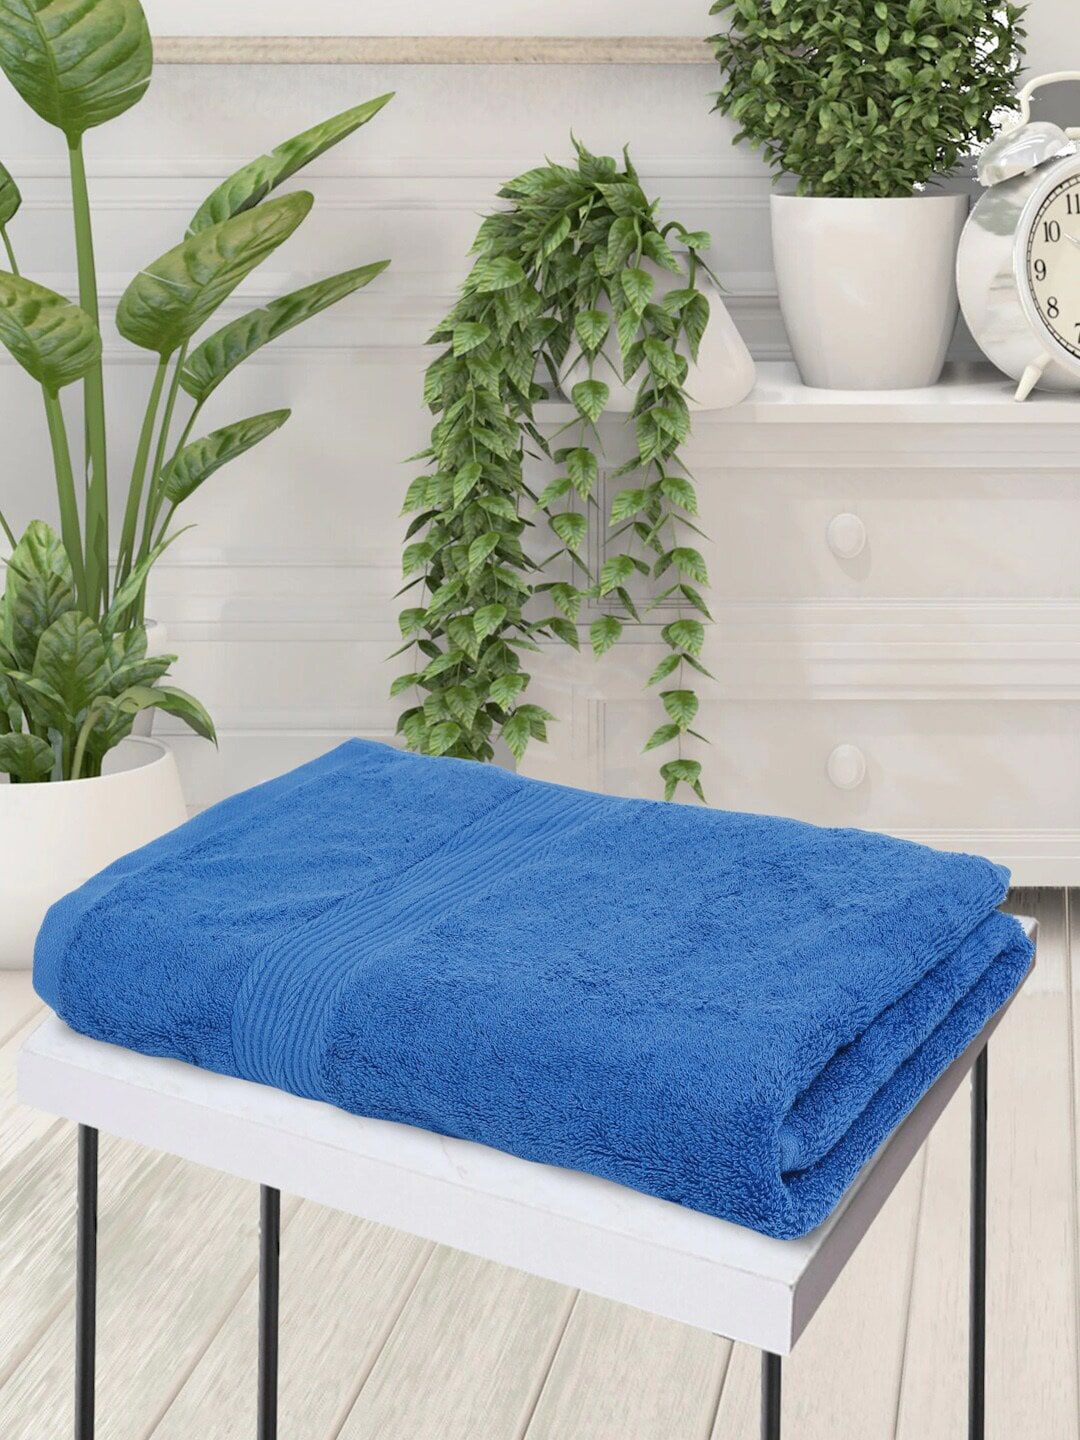 Creeva Blue Solid 500 GSM Cotton Bath Towel Price in India